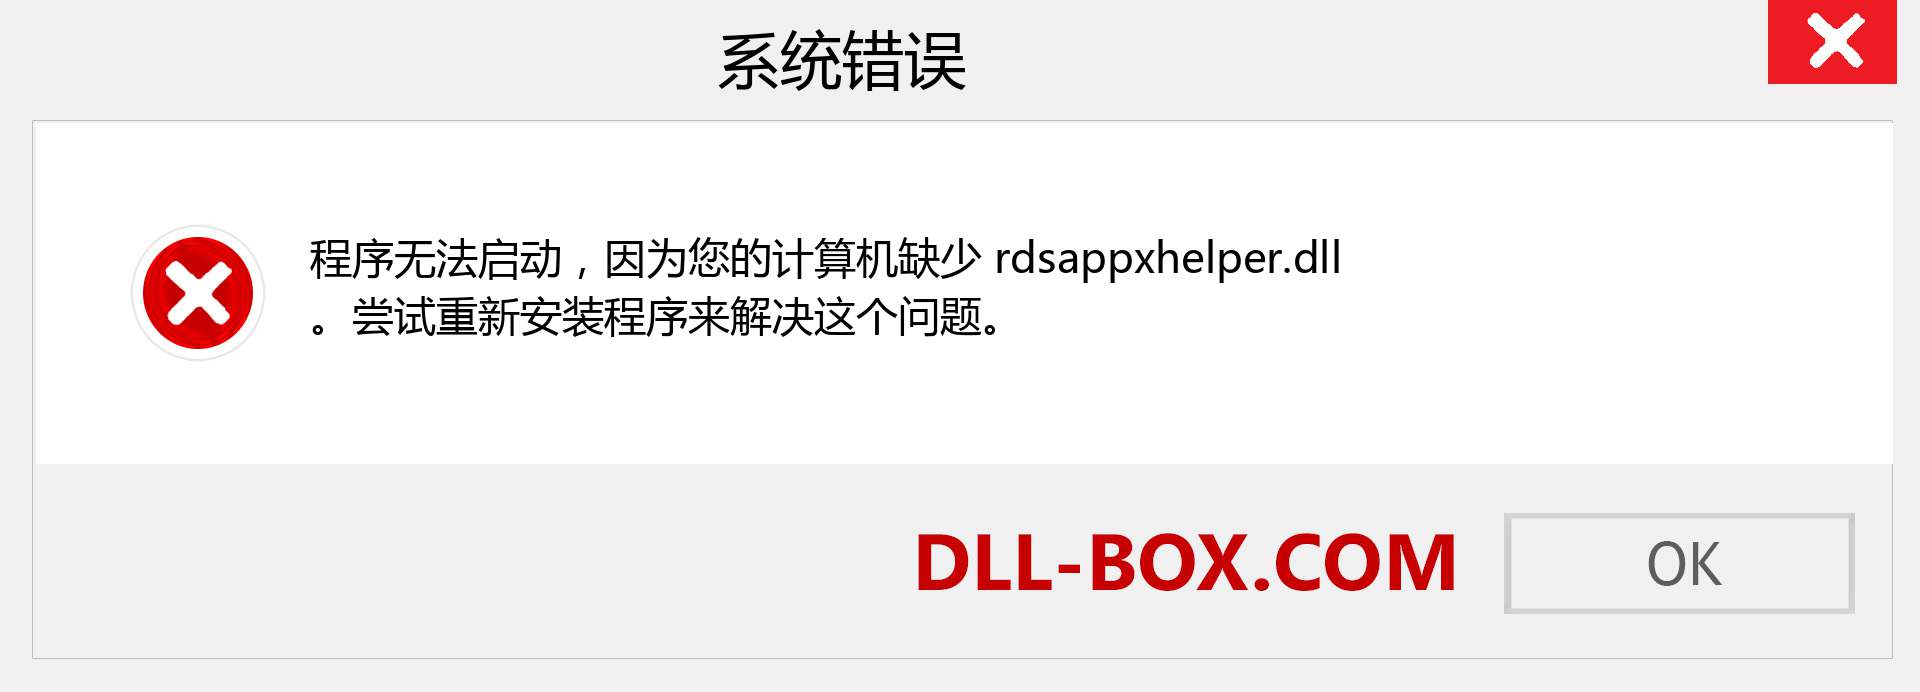 rdsappxhelper.dll 文件丢失？。 适用于 Windows 7、8、10 的下载 - 修复 Windows、照片、图像上的 rdsappxhelper dll 丢失错误